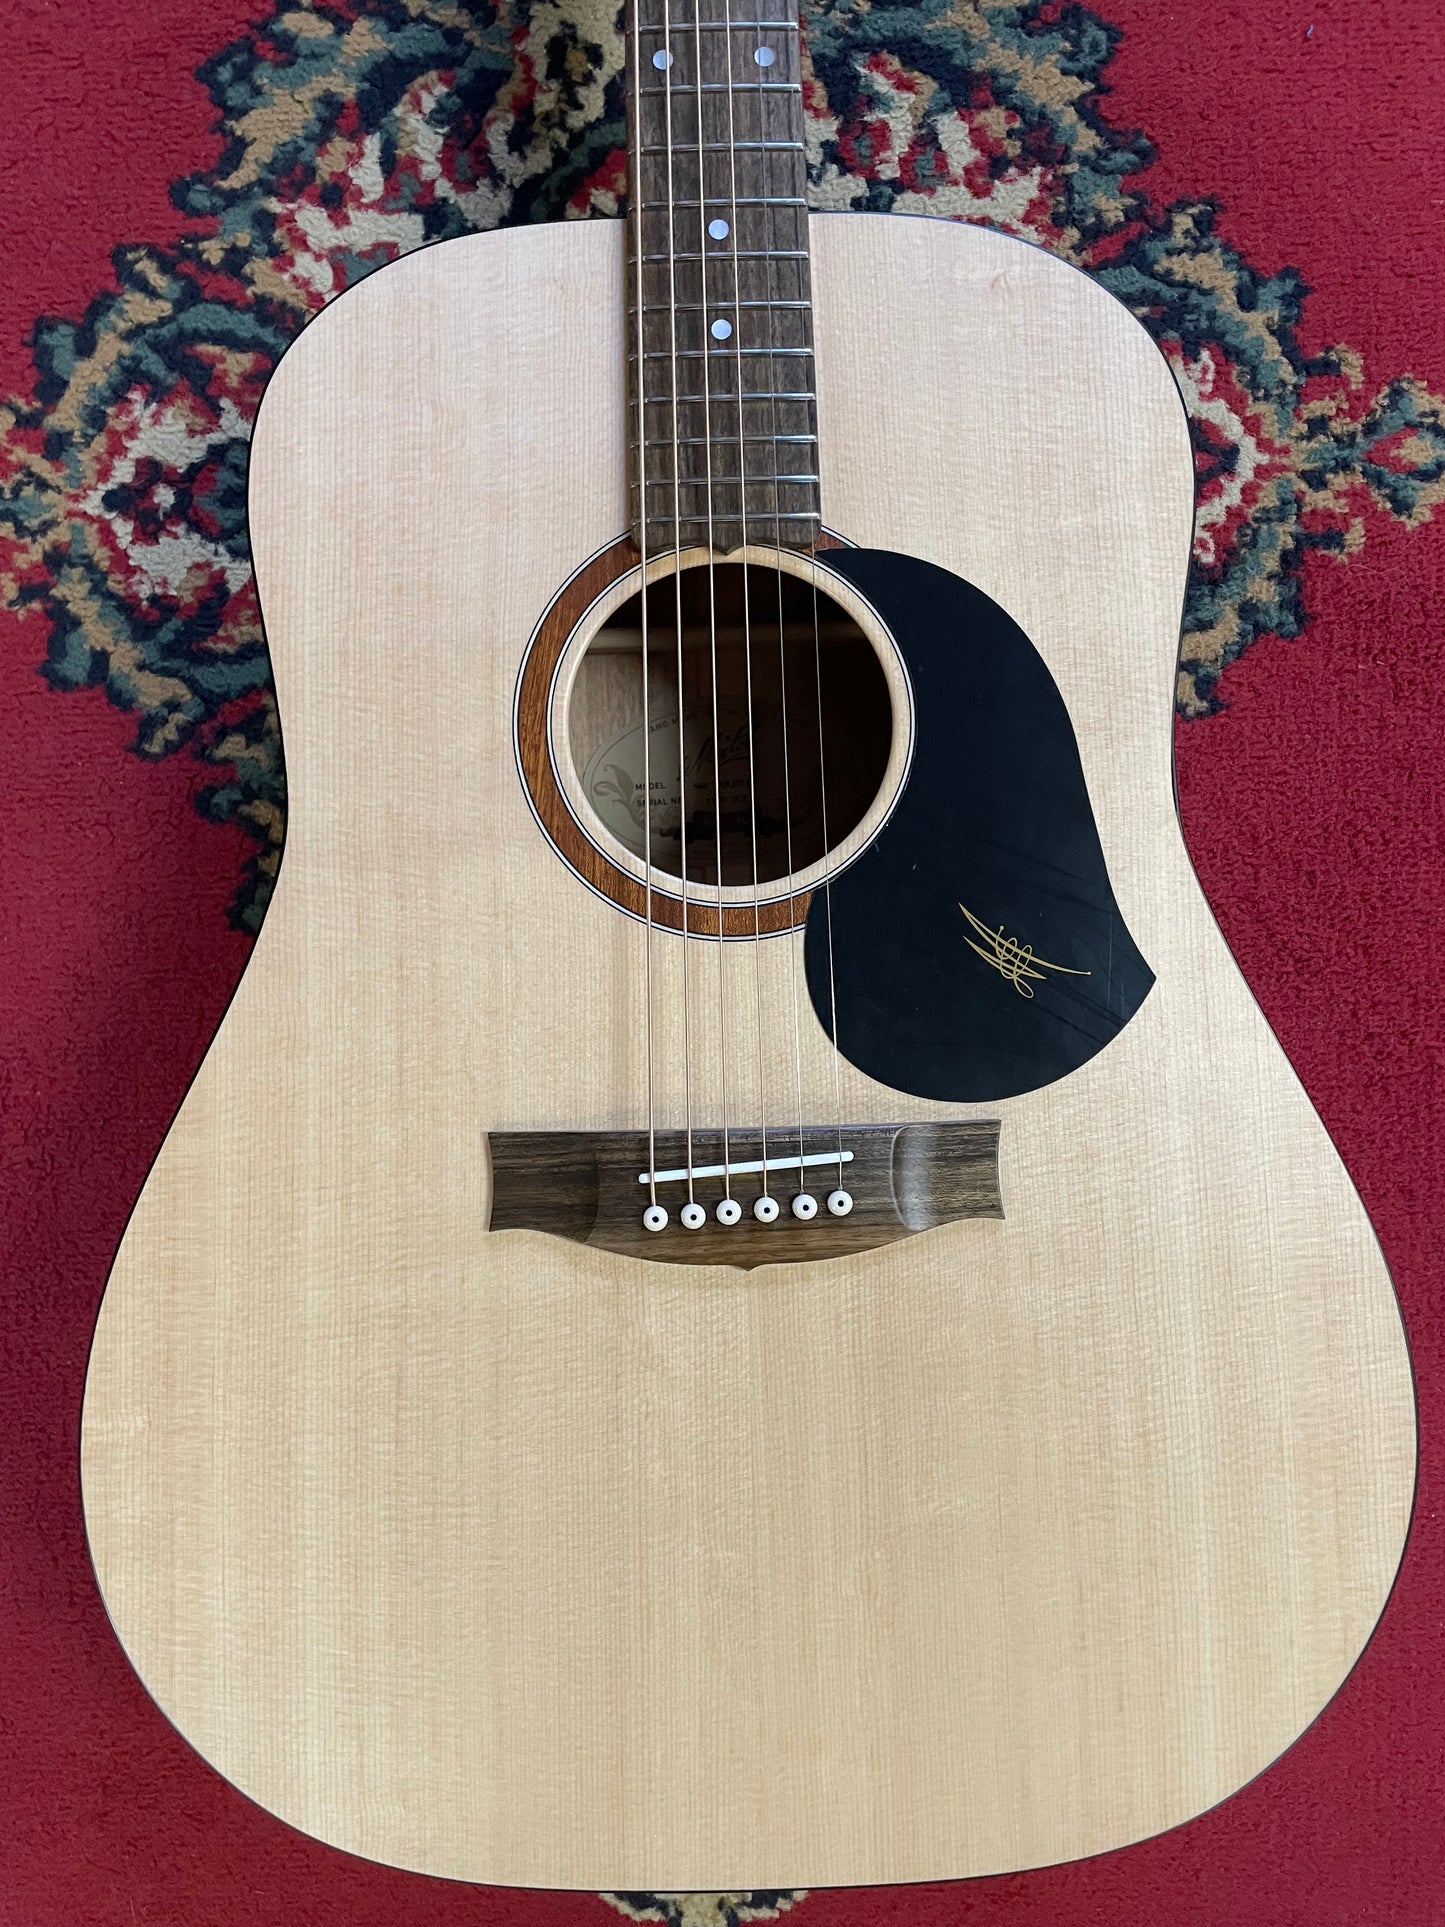 Maton S60 Acoustic Guitar